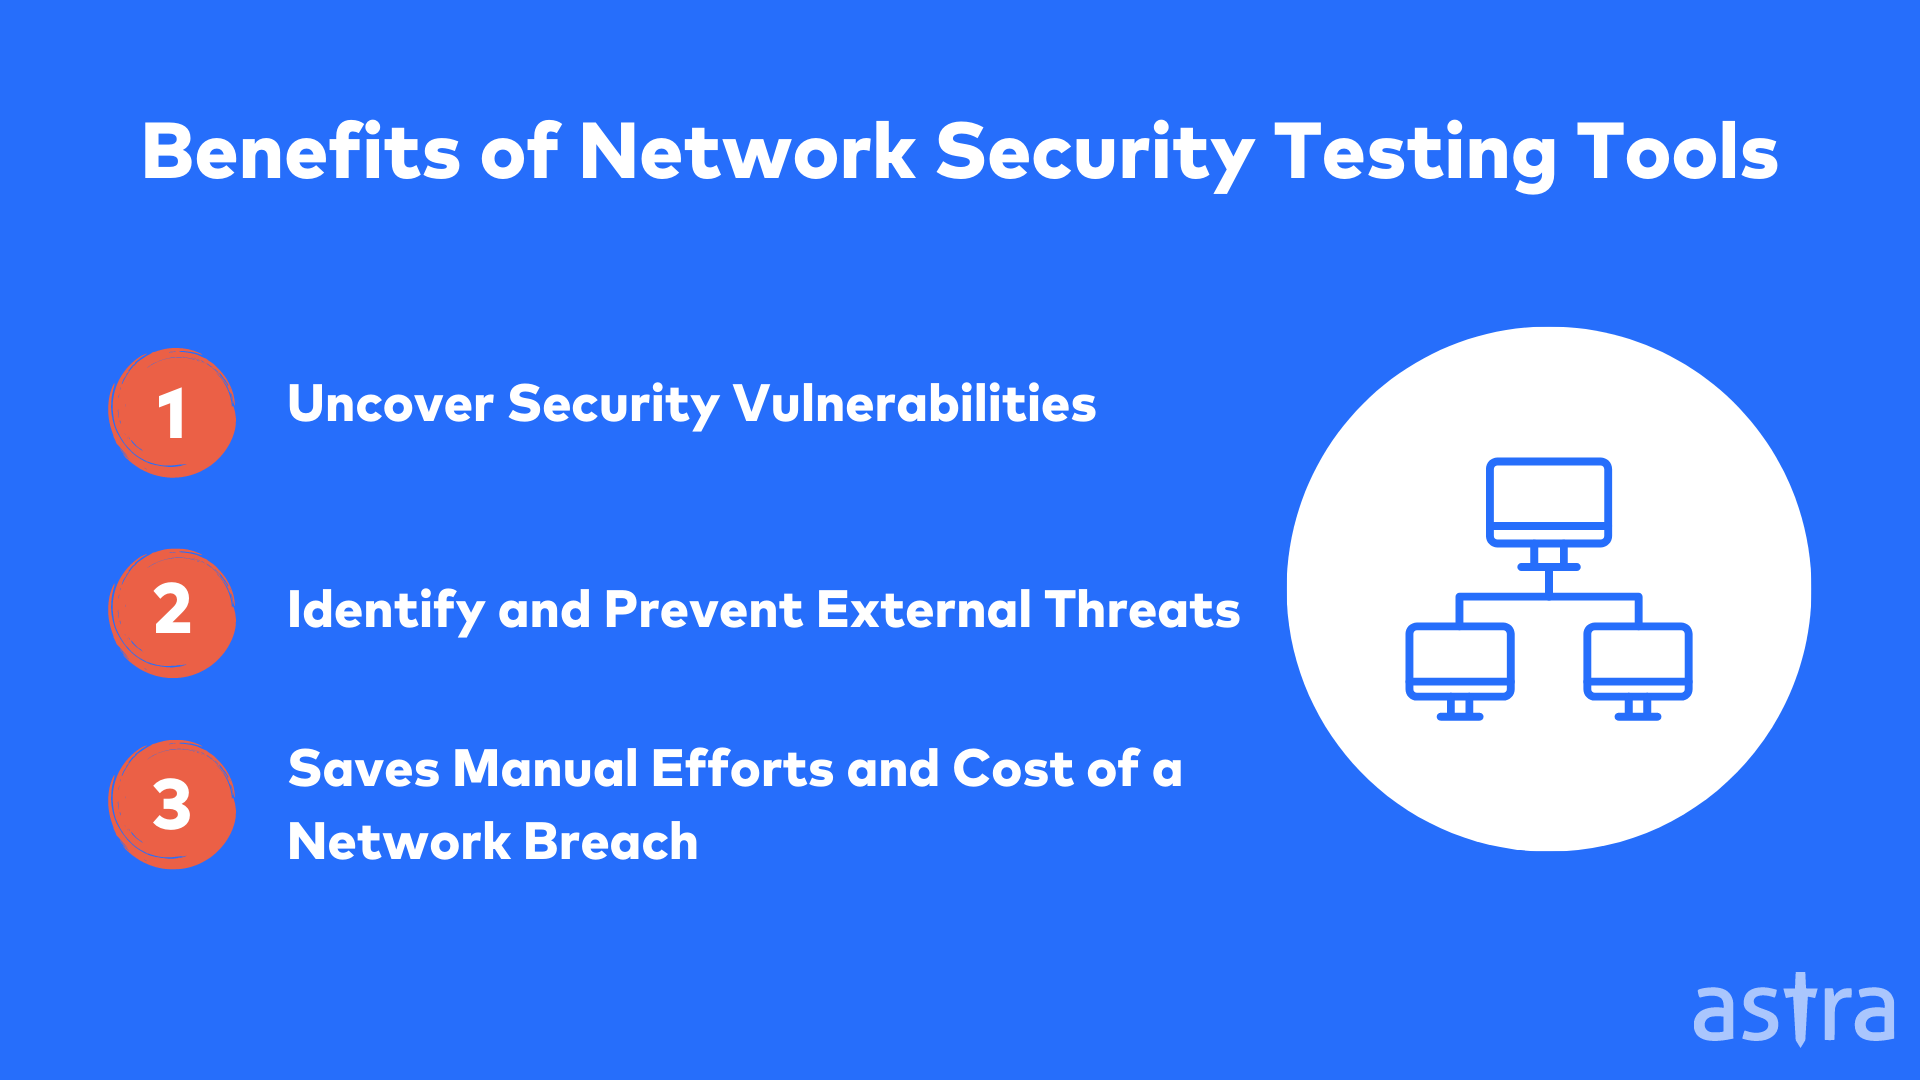 Benefits of Network Vulnerability Scanning